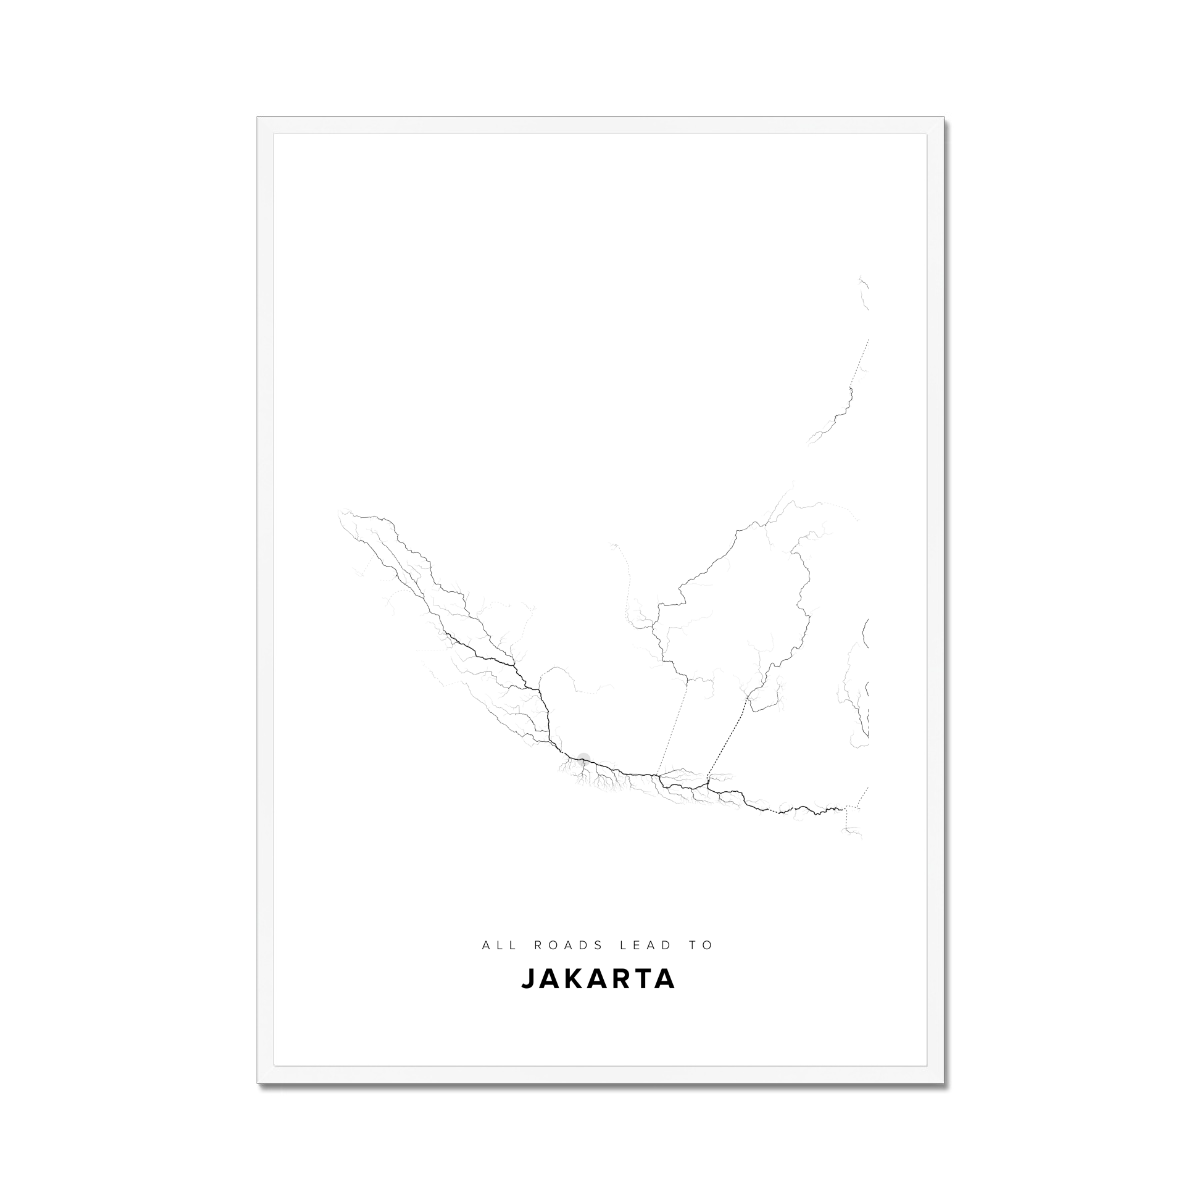 All roads lead to Jakarta (Indonesia) Fine Art Map Print